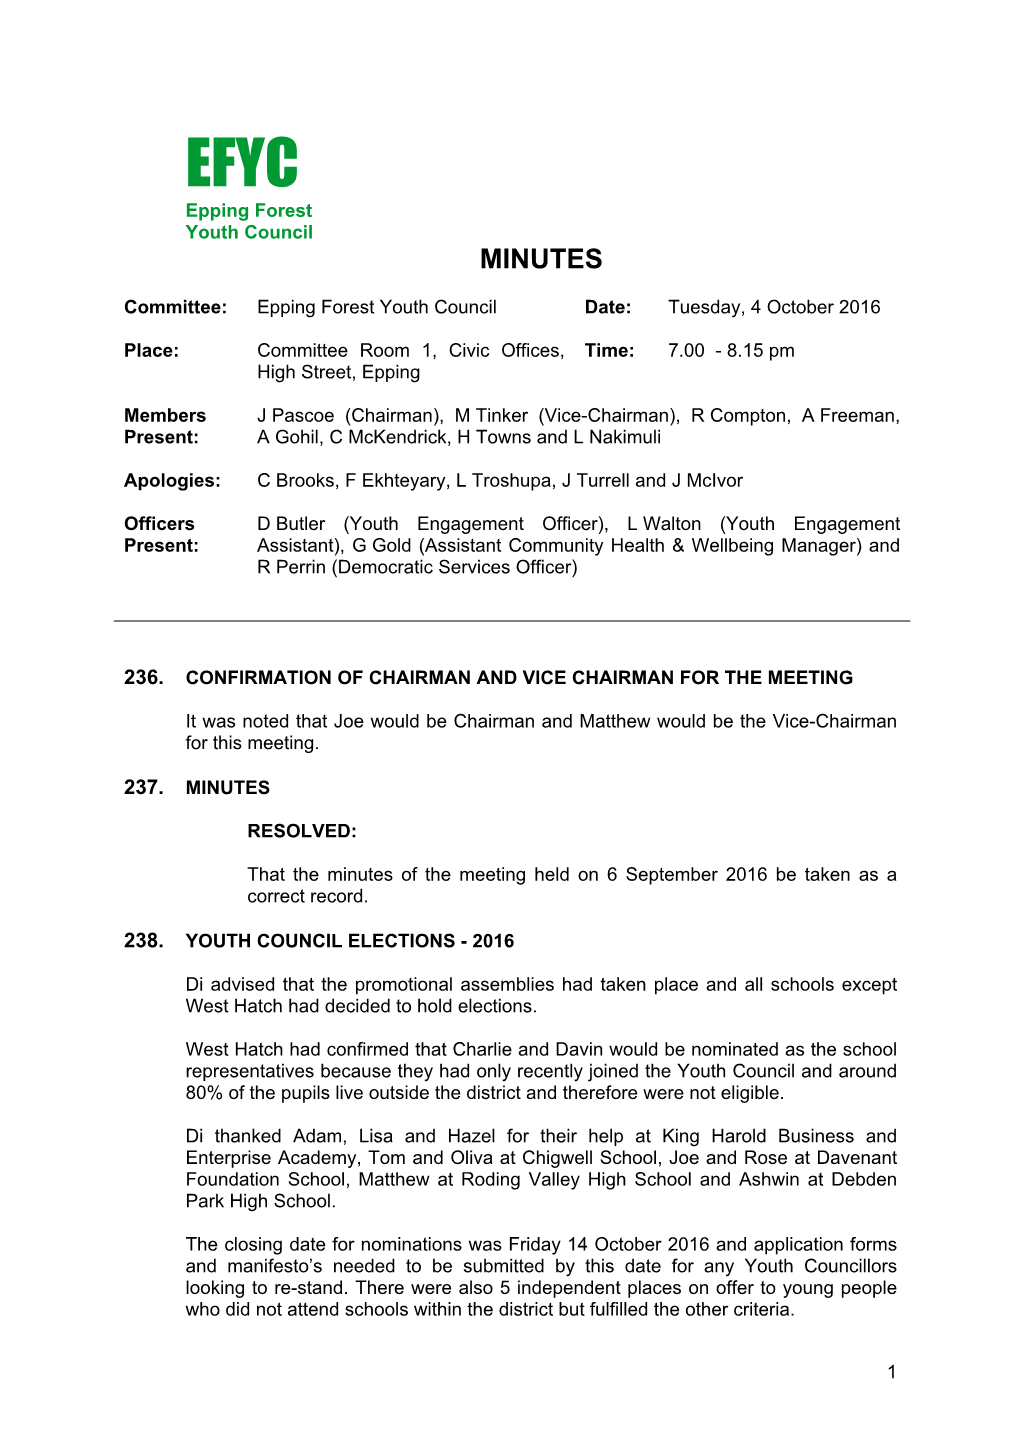 Printed Minutes PDF 77 KB